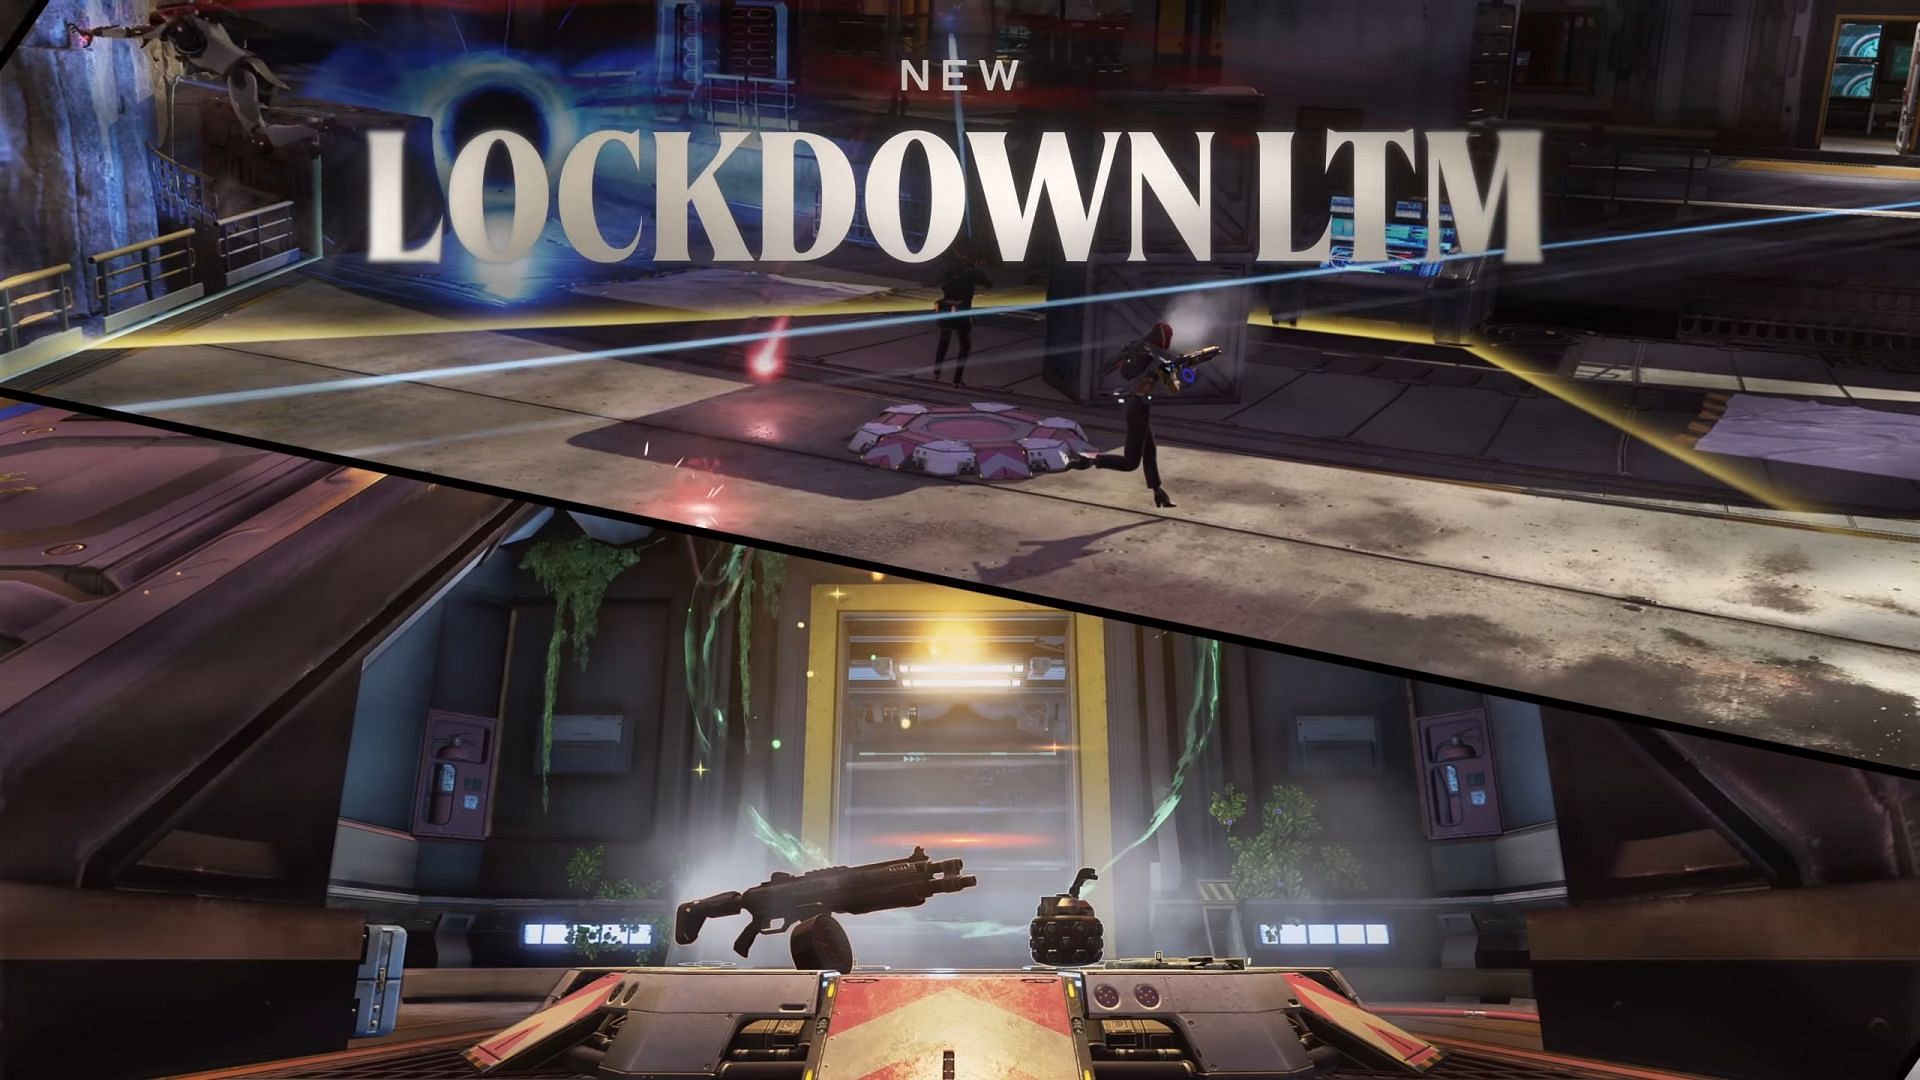 Lockdown LTM in Apex Legends